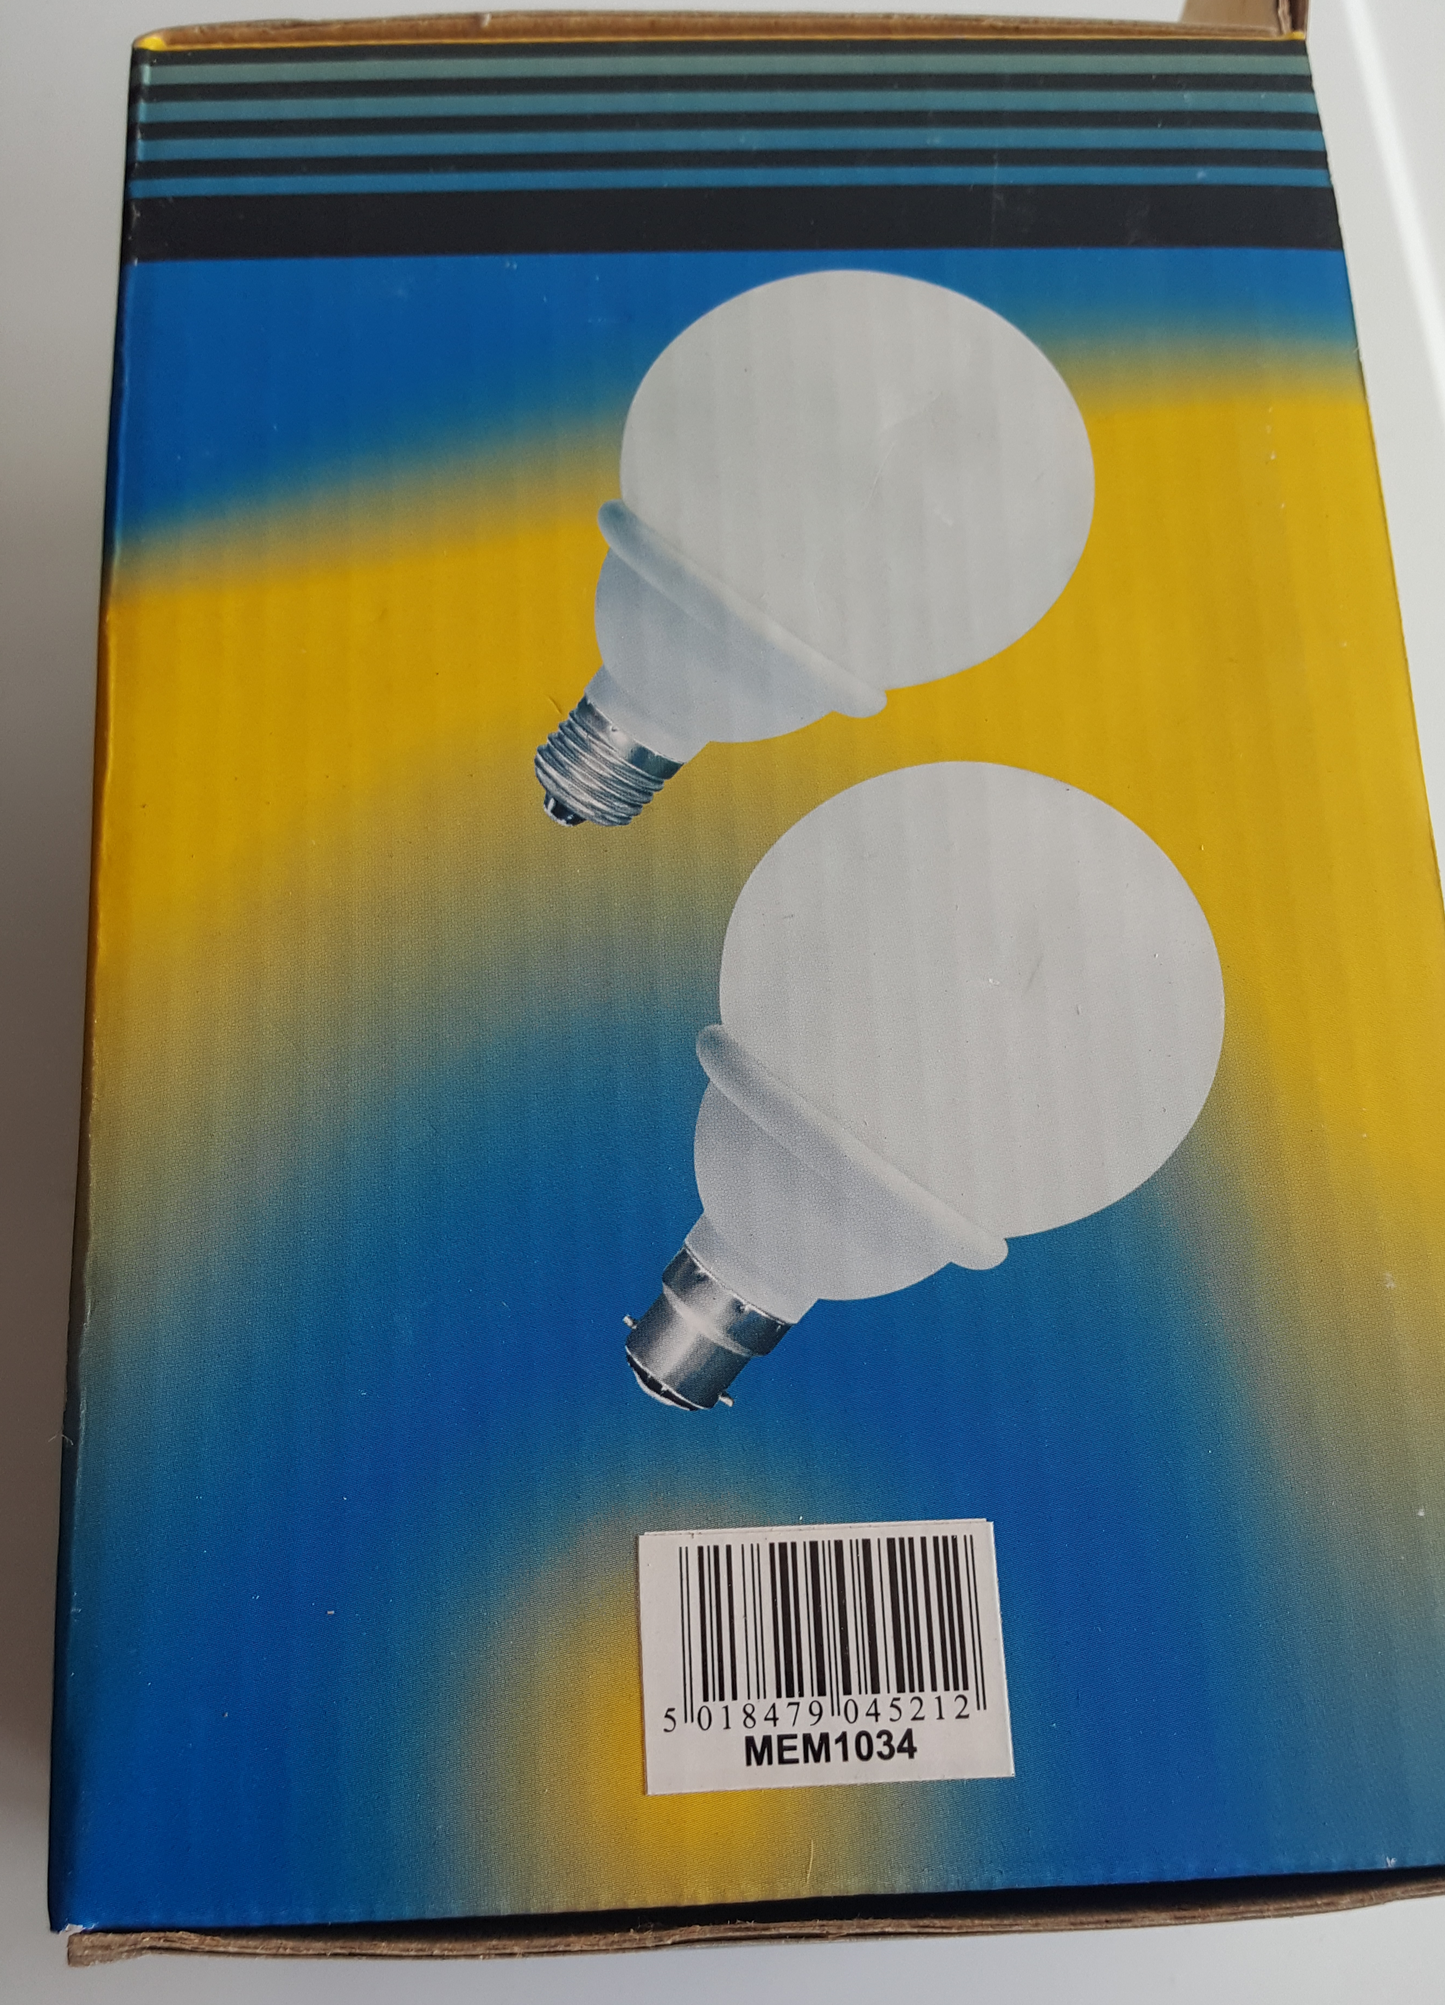 Globe Bulb 24W ES Warm White/Daylight - Beachcomber Lighting